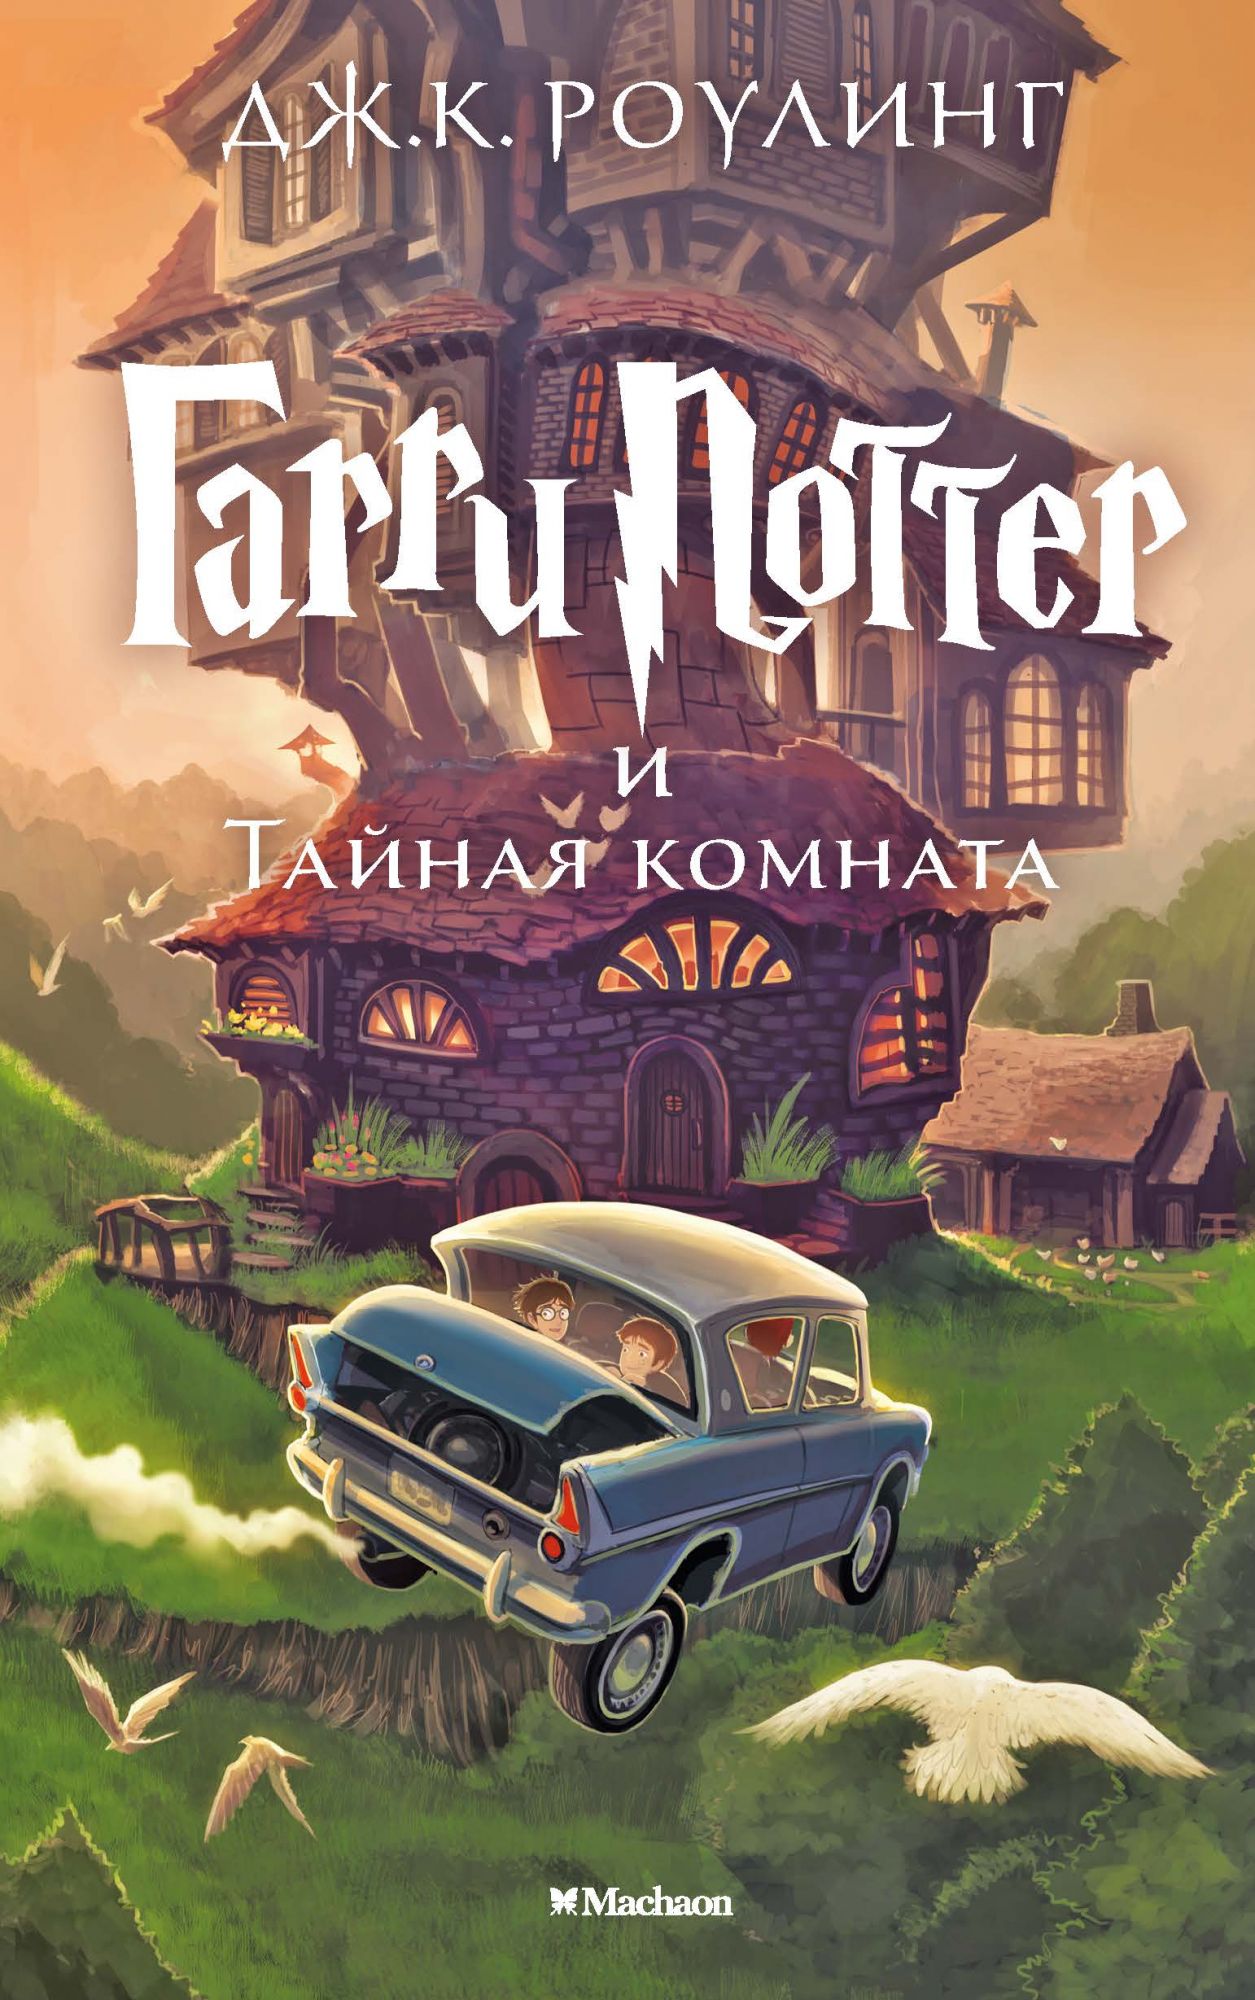 Book “Гарри Поттер и Тайная комната” by Дж.К. Роулинг — 2014